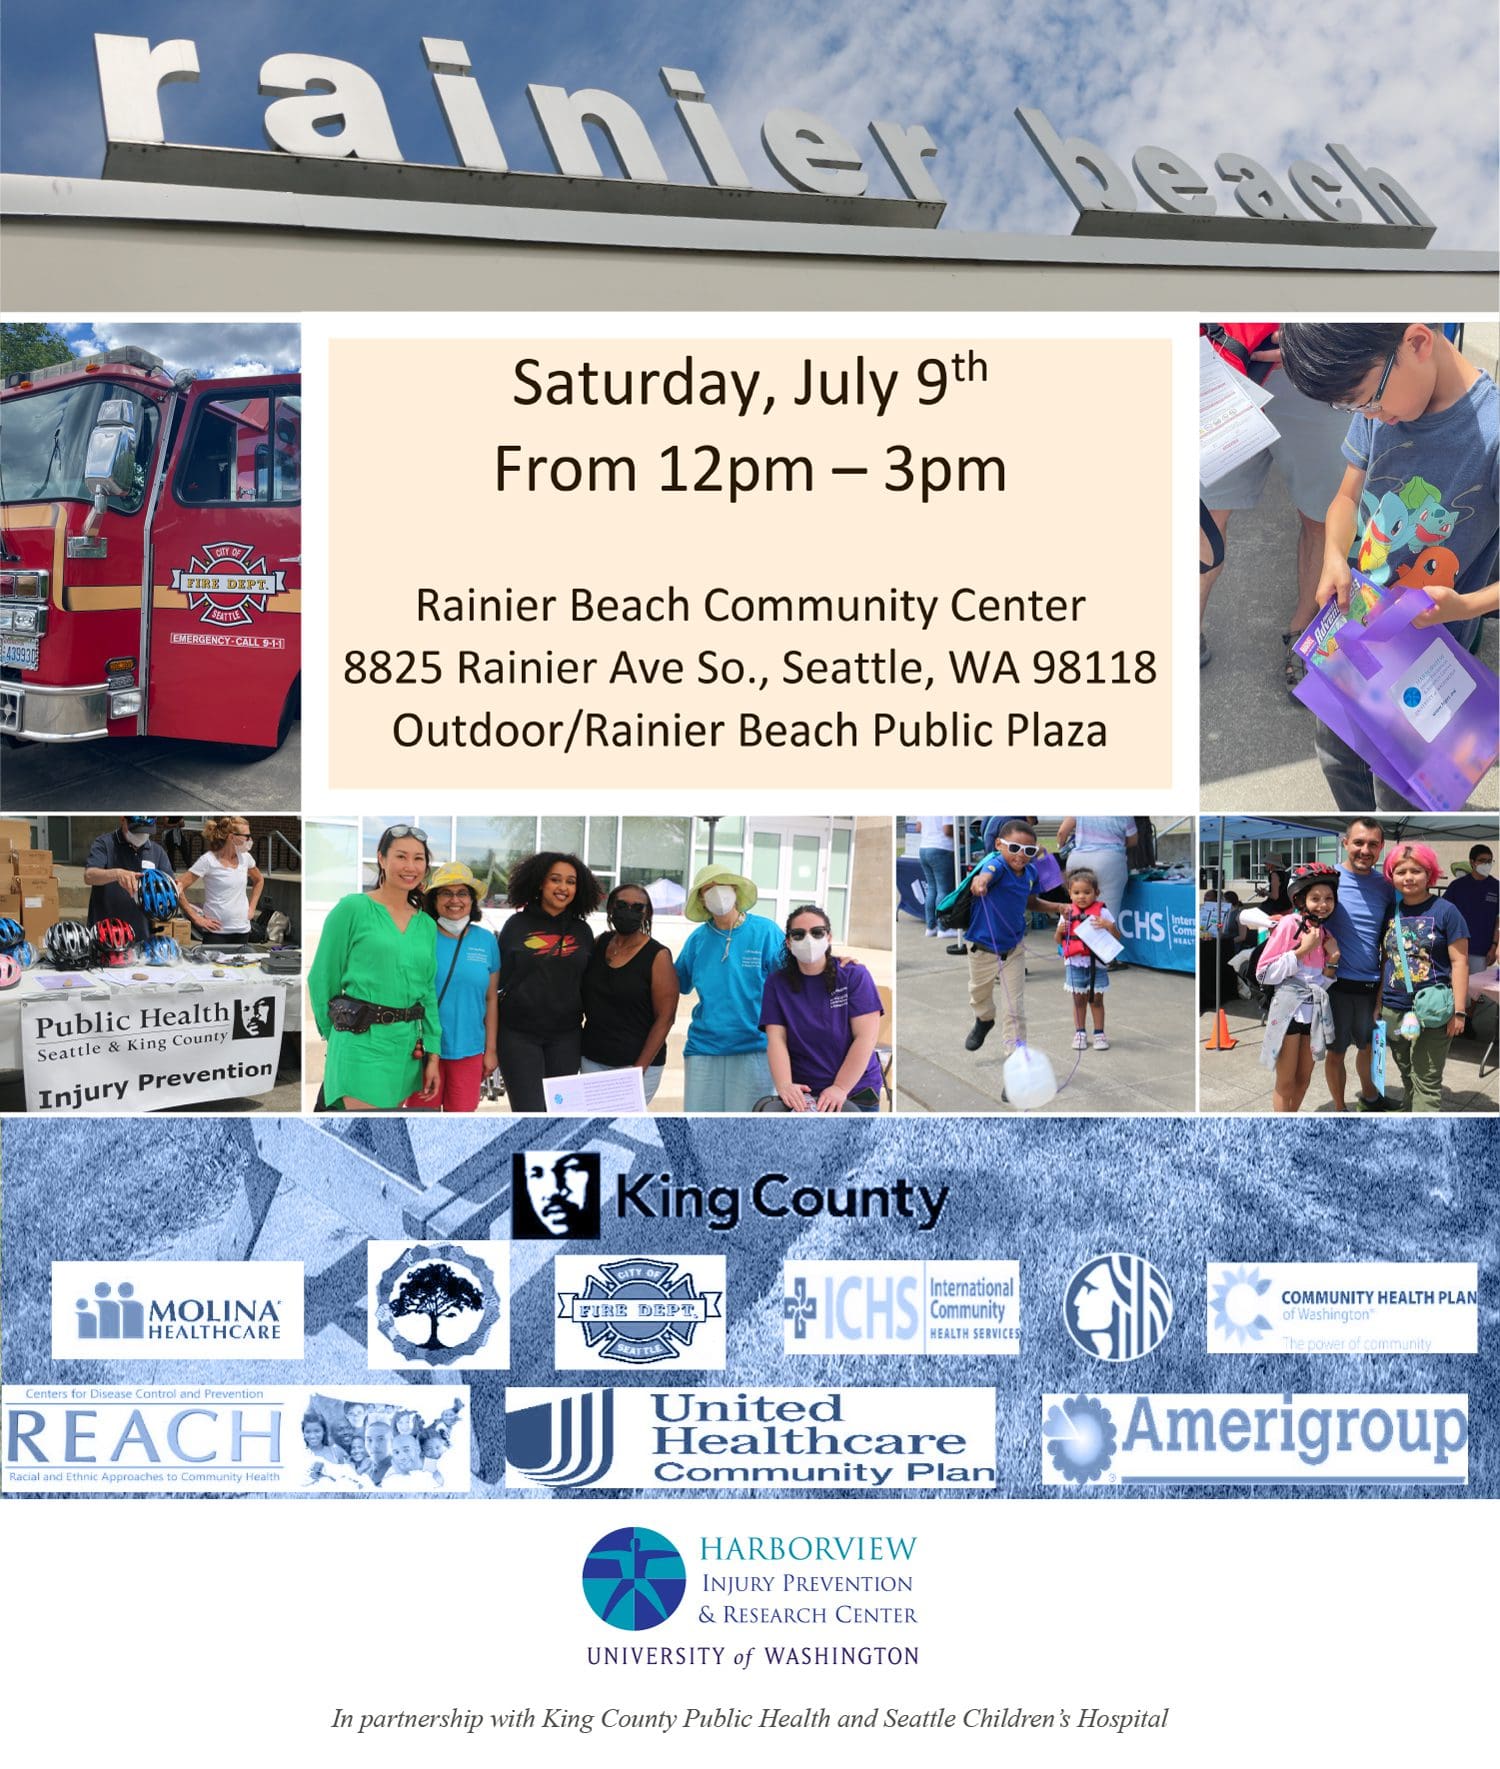 Rainier Beach, Saturday, July 9th from 12pm-3pm, Rainier Beach Community Center, 8825 Rainier Ave So., Seattle, WA 98118, Outdoo/Rainier Beach Public Plaza